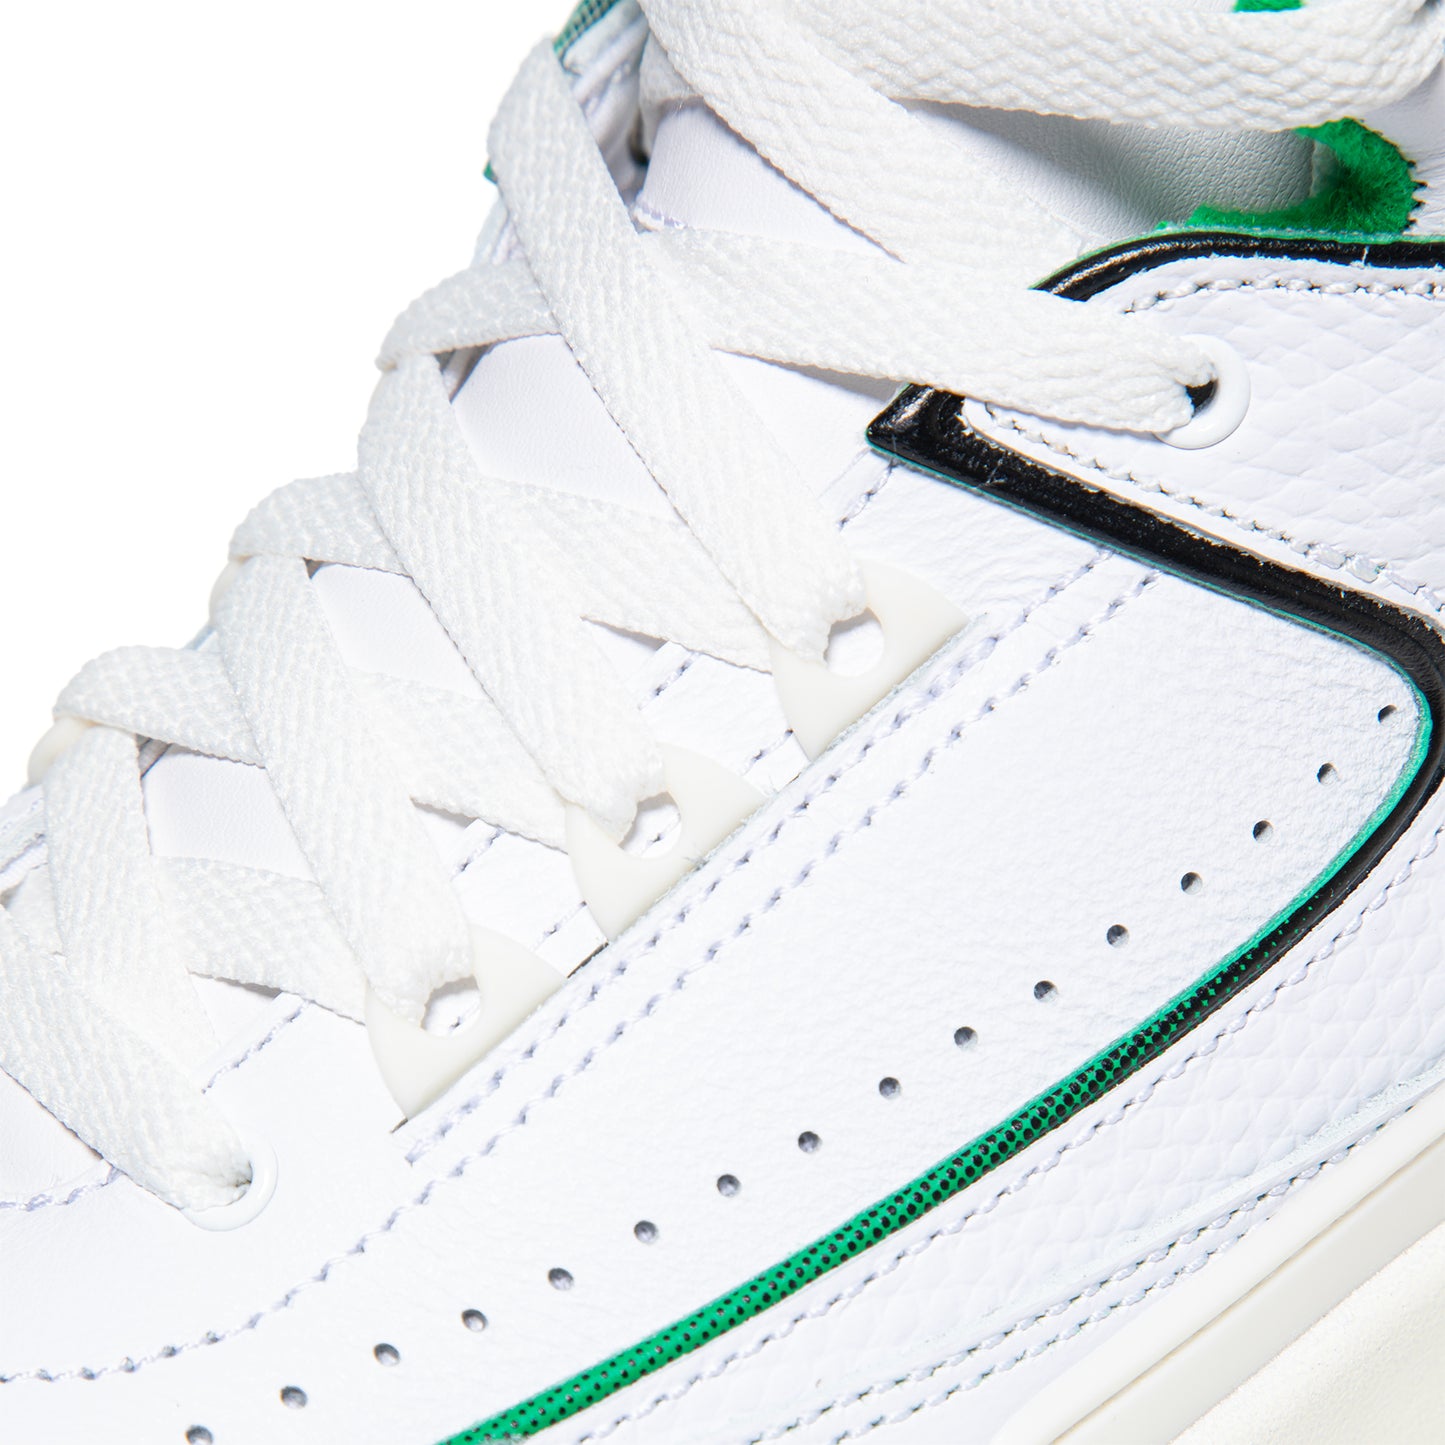 Nike Kids Air Jordan 2 Retro (White/Lucky Green/Sail)